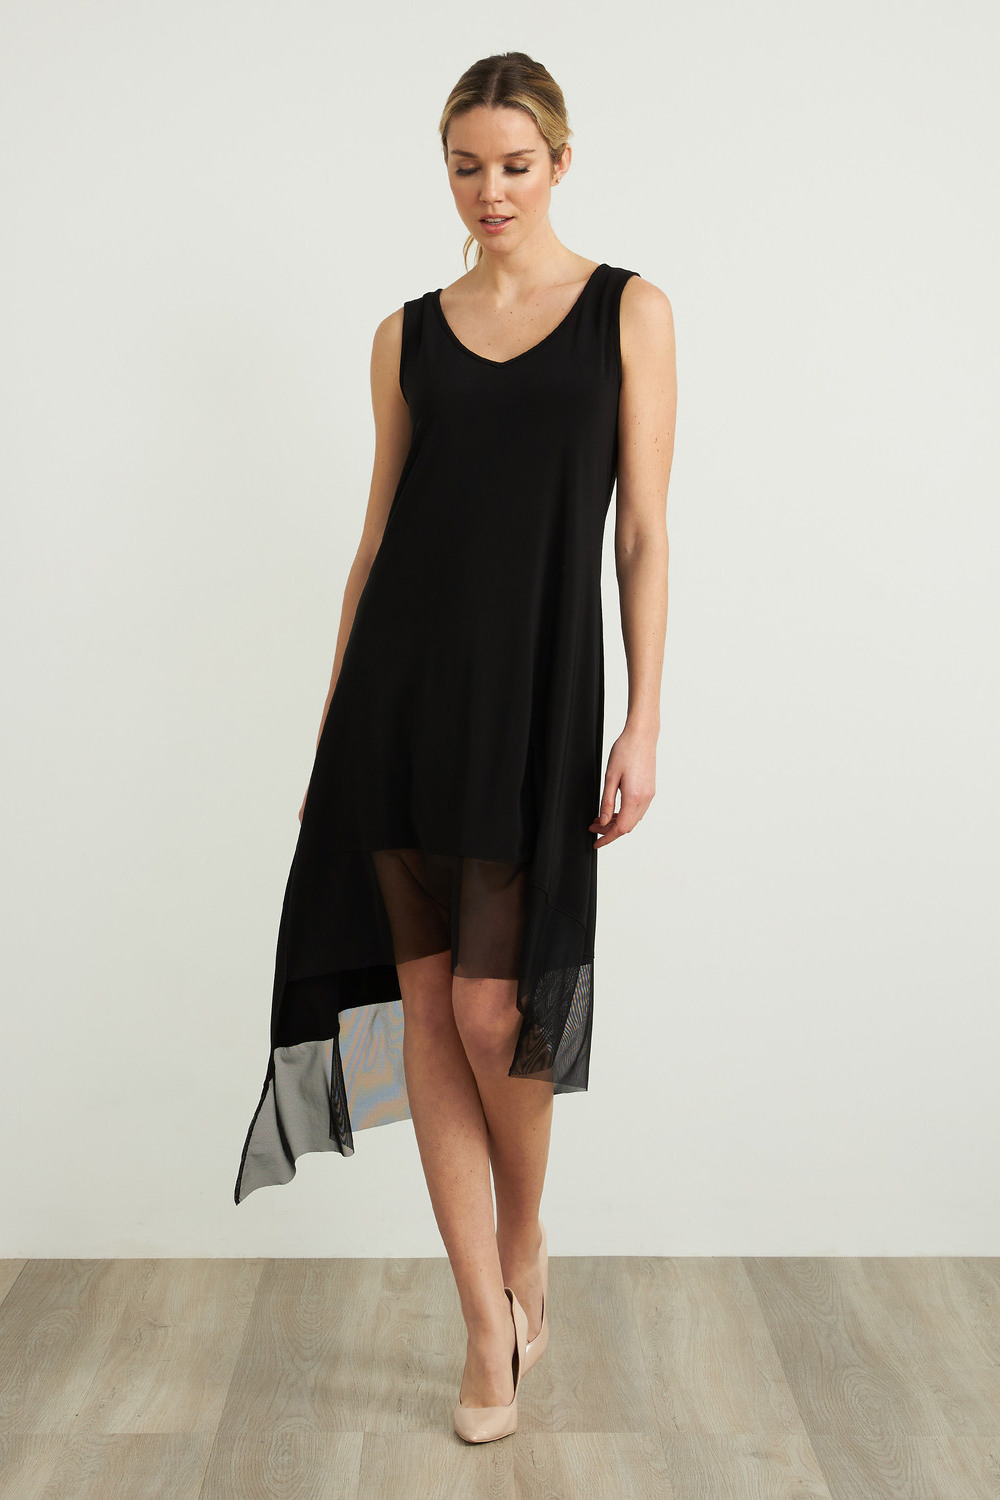 Joseph Ribkoff Sheer Asymmetric Hem Dress Style 212195. Black